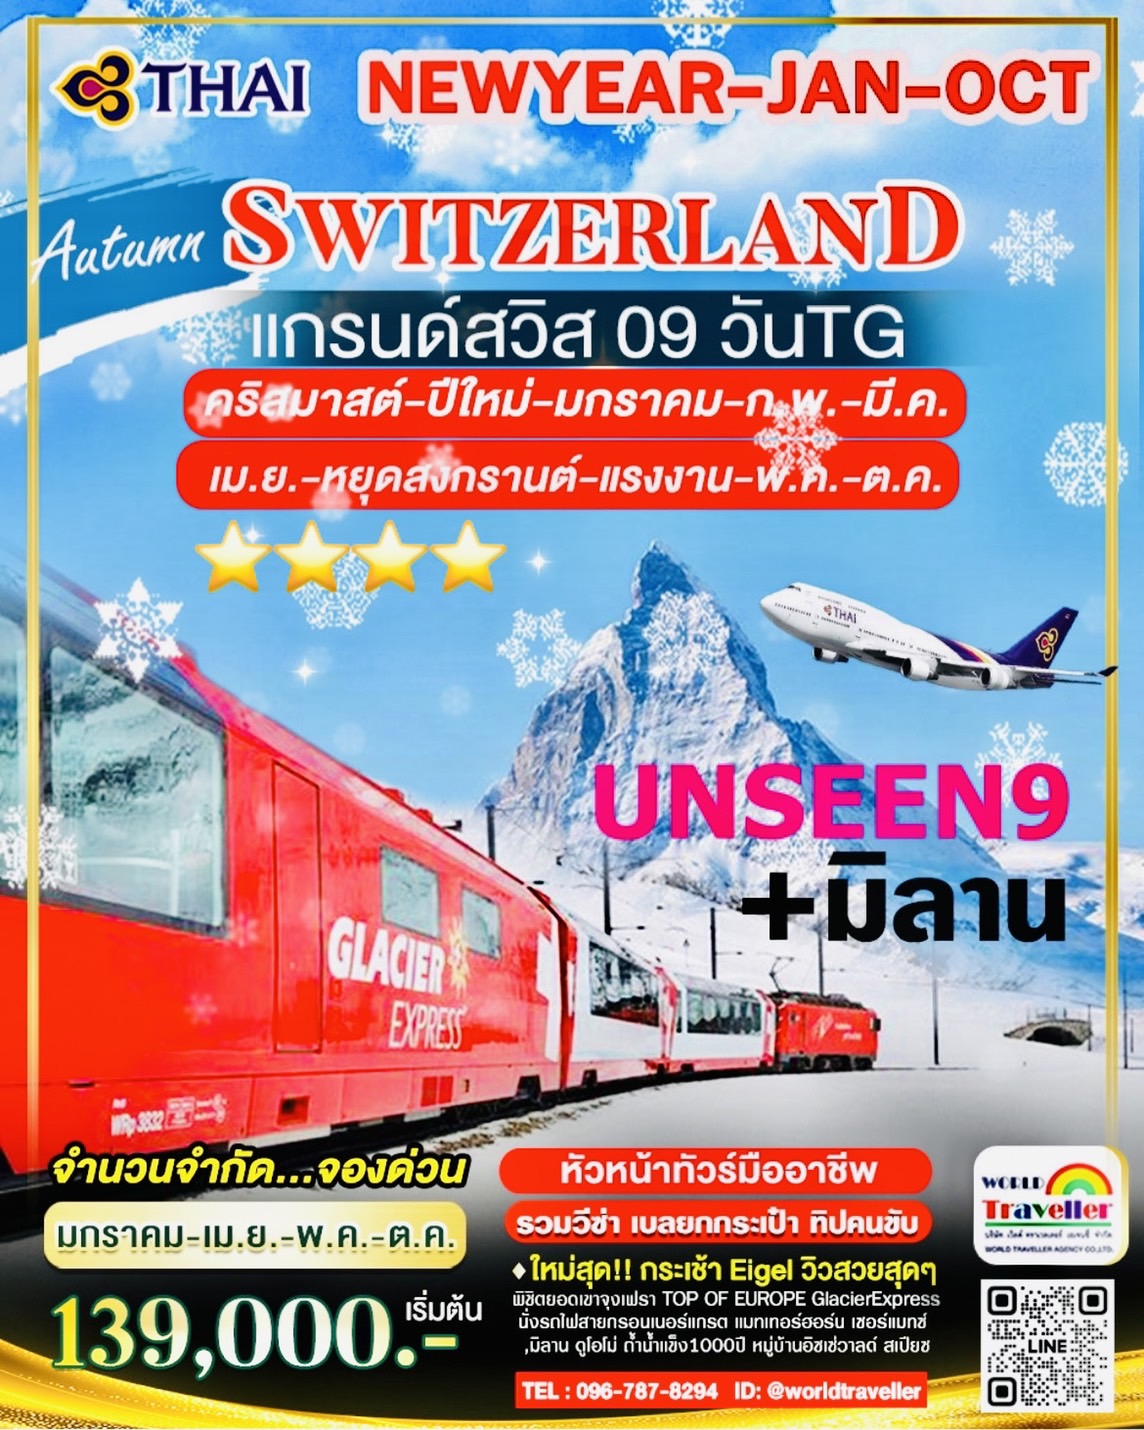 UNSEEN9 แกรนด์สวิสเซอร์แลนด์9วันTG จุงเฟรา+แมทเทอร์ฮอร์น-รถไฟกลาเซียเอกซ์เพรส+ช้อปปิ้งมิลาน NEW